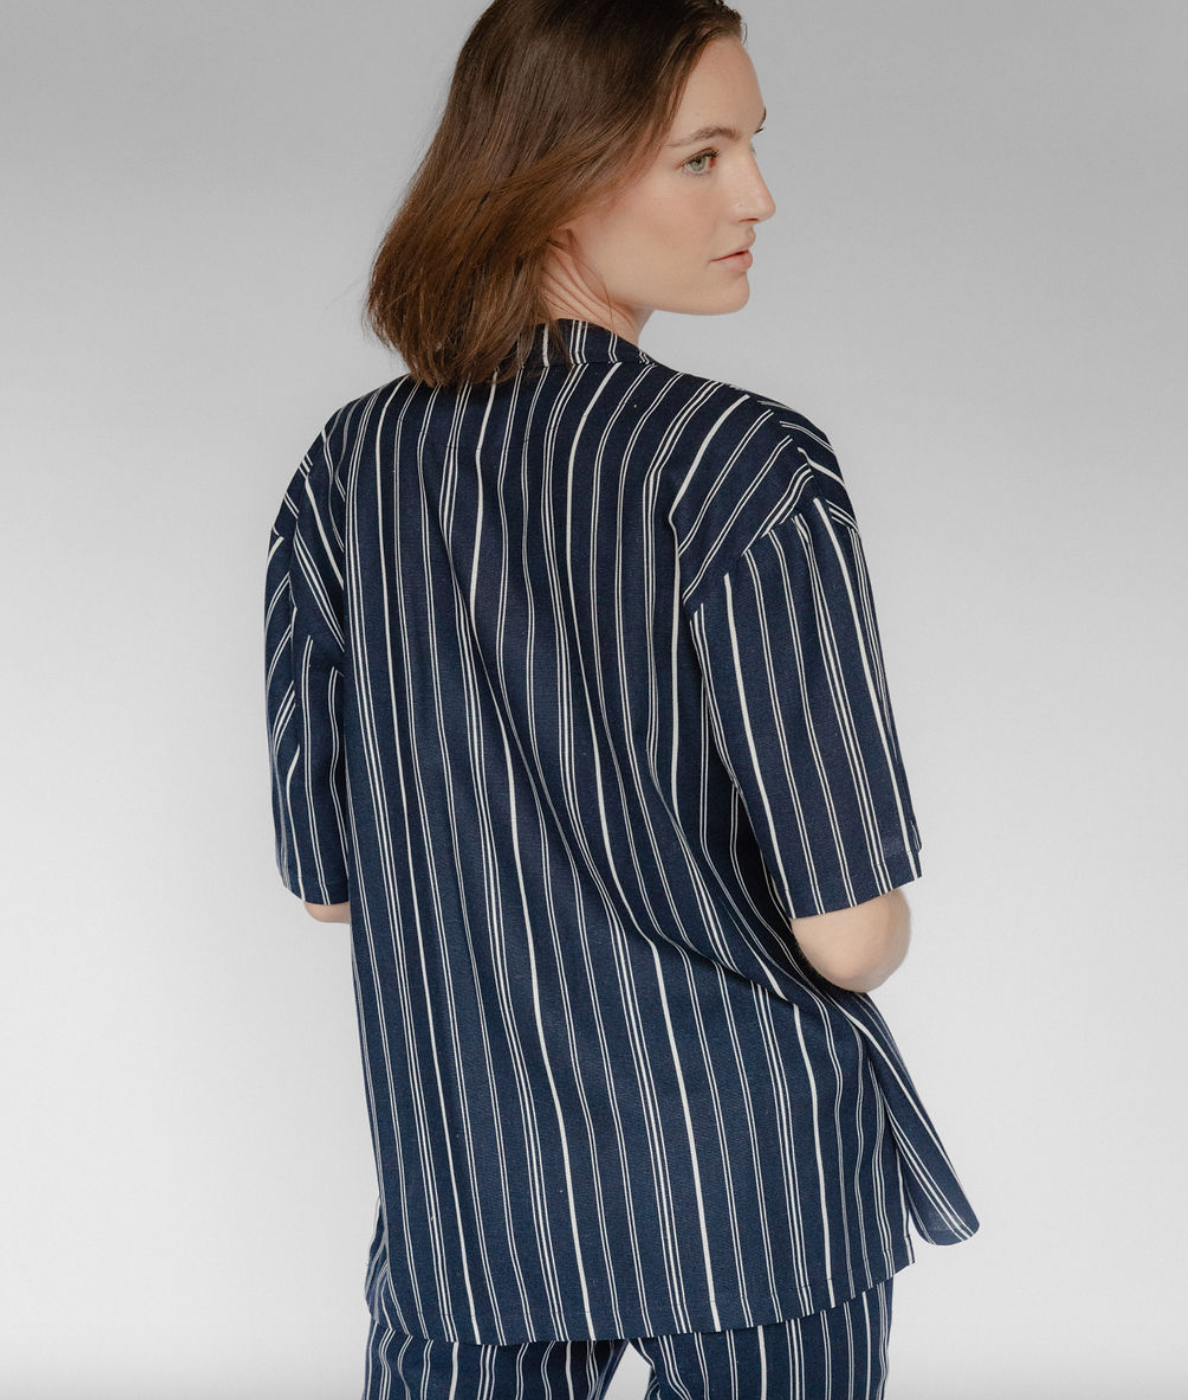 Tessa Navy Striped Cotton Shirt